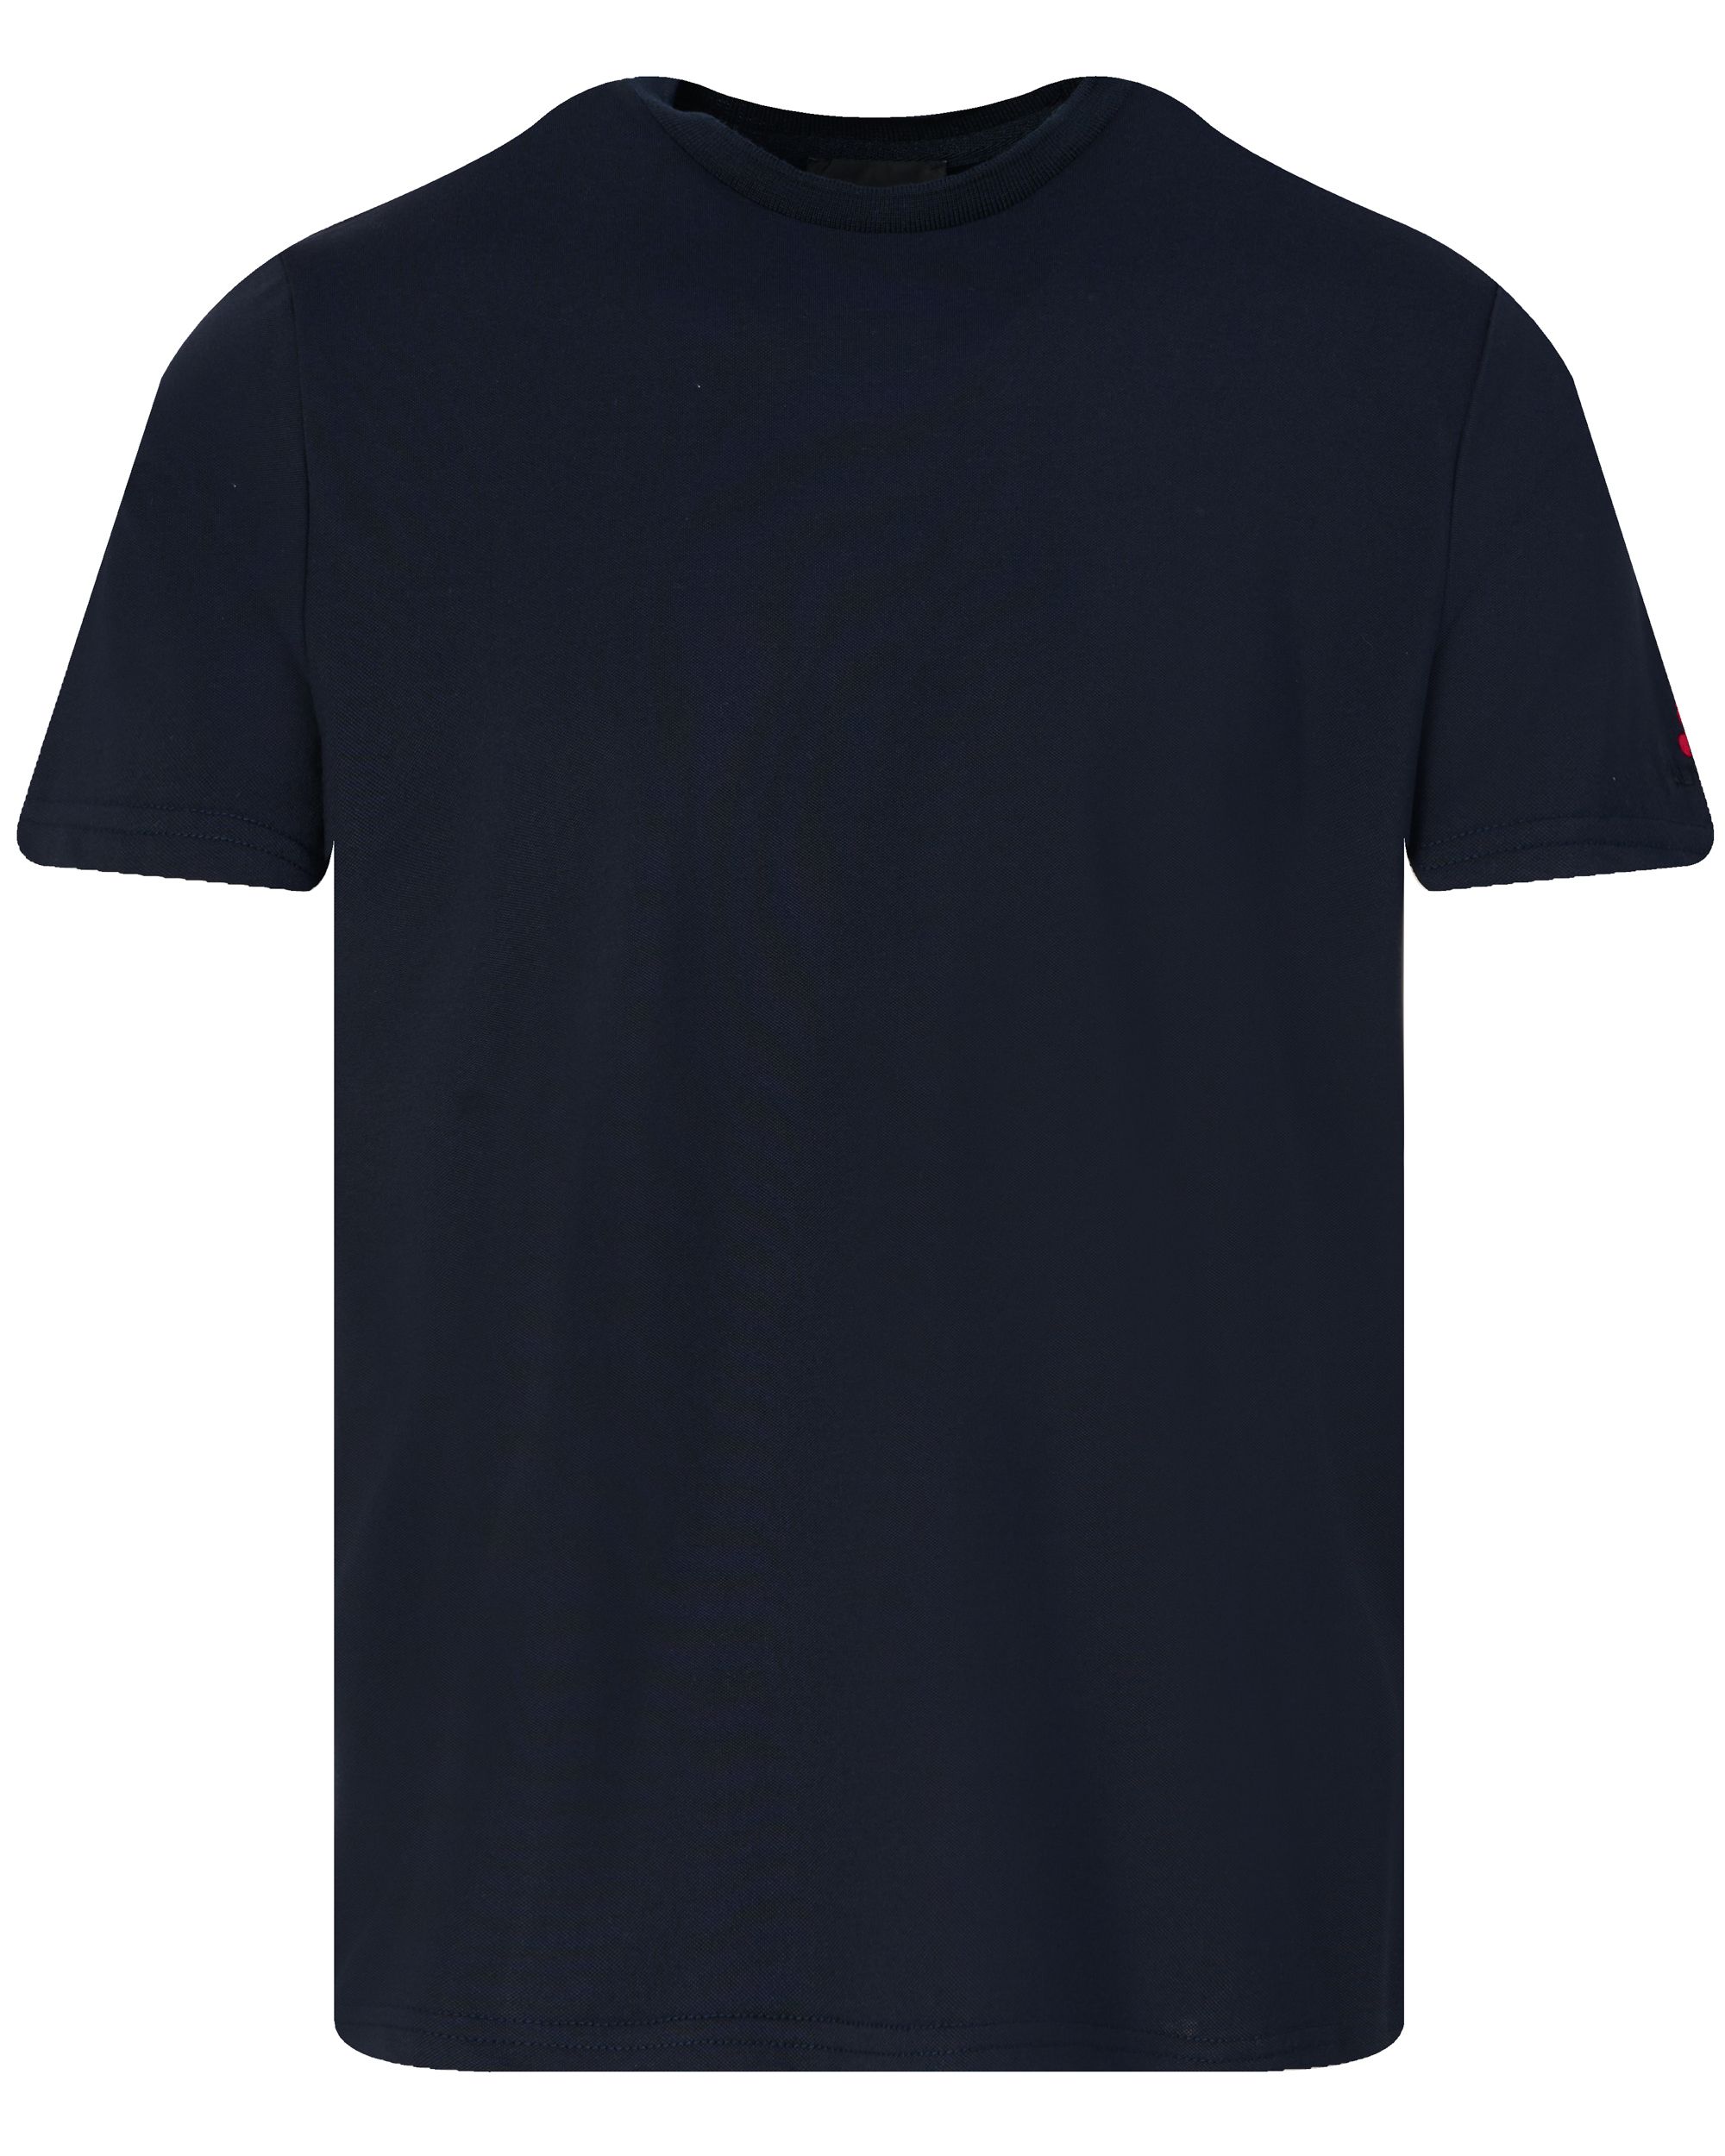 Peuterey Zole T-shirt KM Donker blauw 094269-001-L